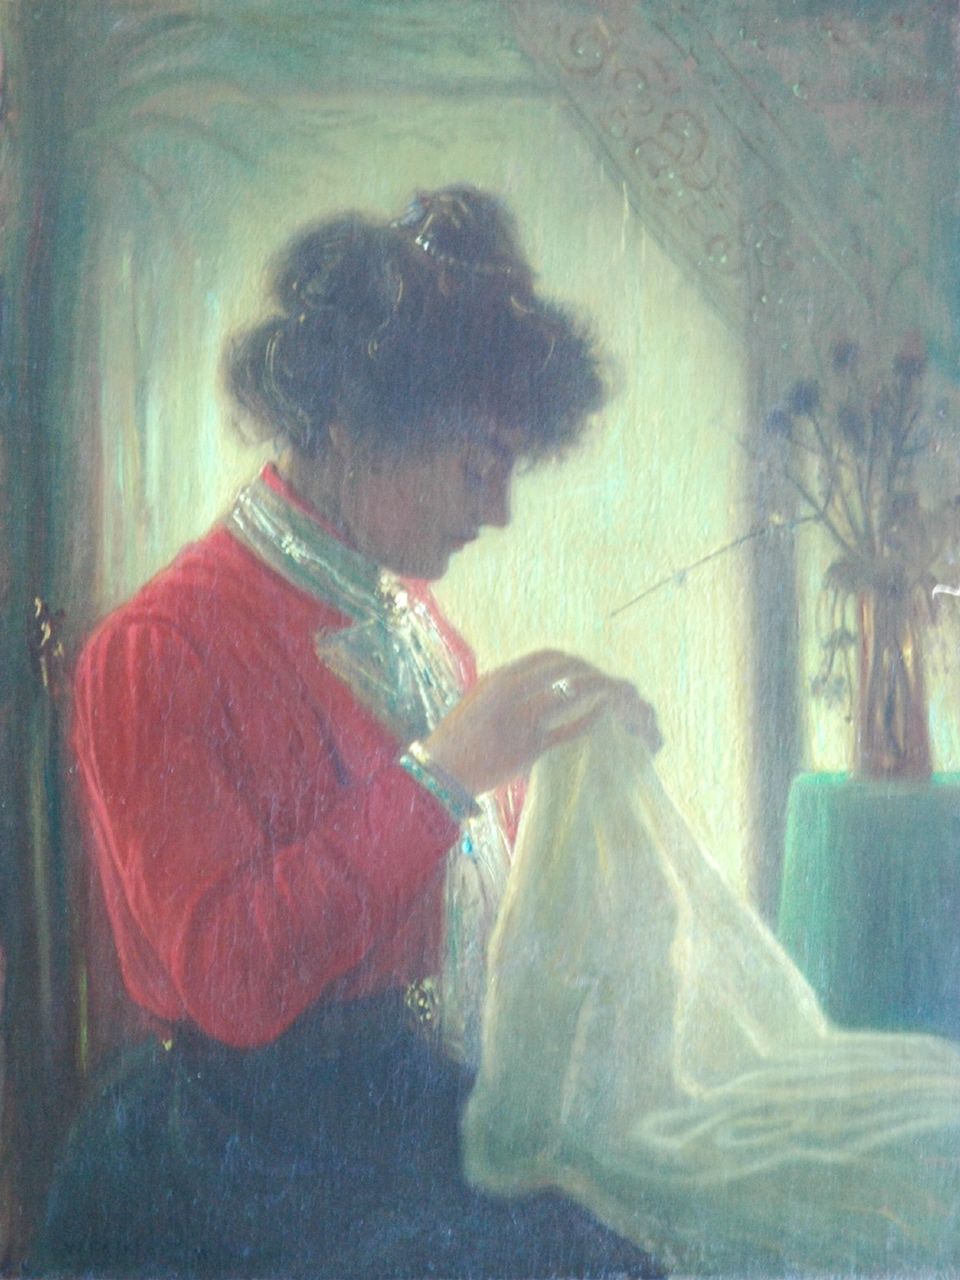 Pothast W.F.A.  | 'Willem' Frederik Alphons  Pothast, Embroideress, oil on canvas 45.0 x 34.3 cm, signed l.l.